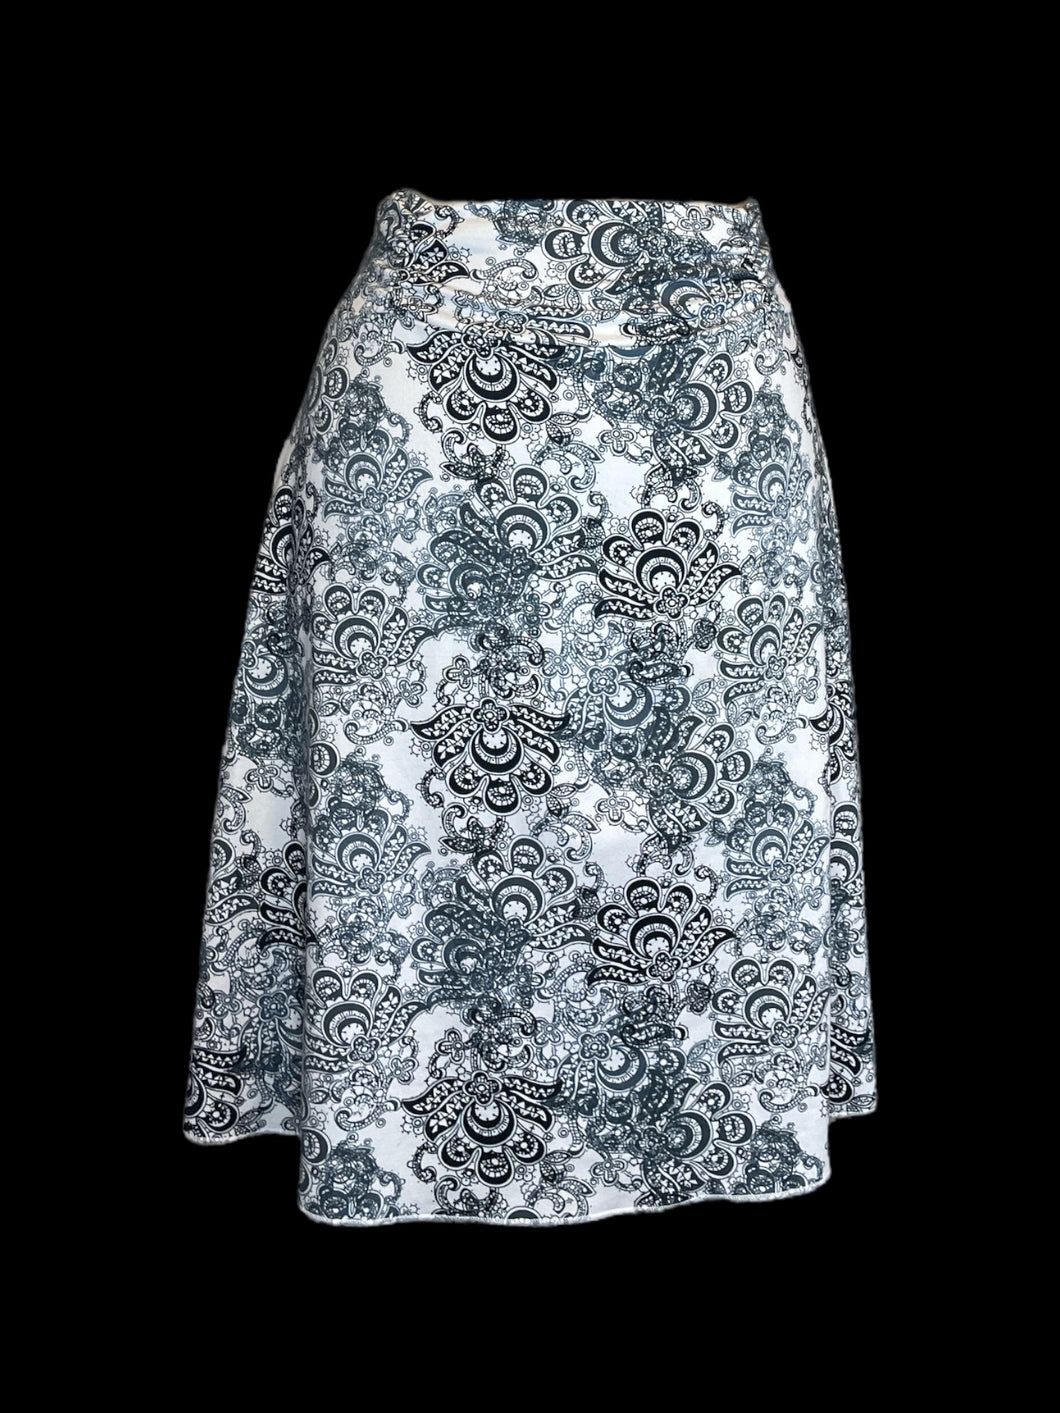 L White, grey, & black paisley skirt w/ ruching on waist